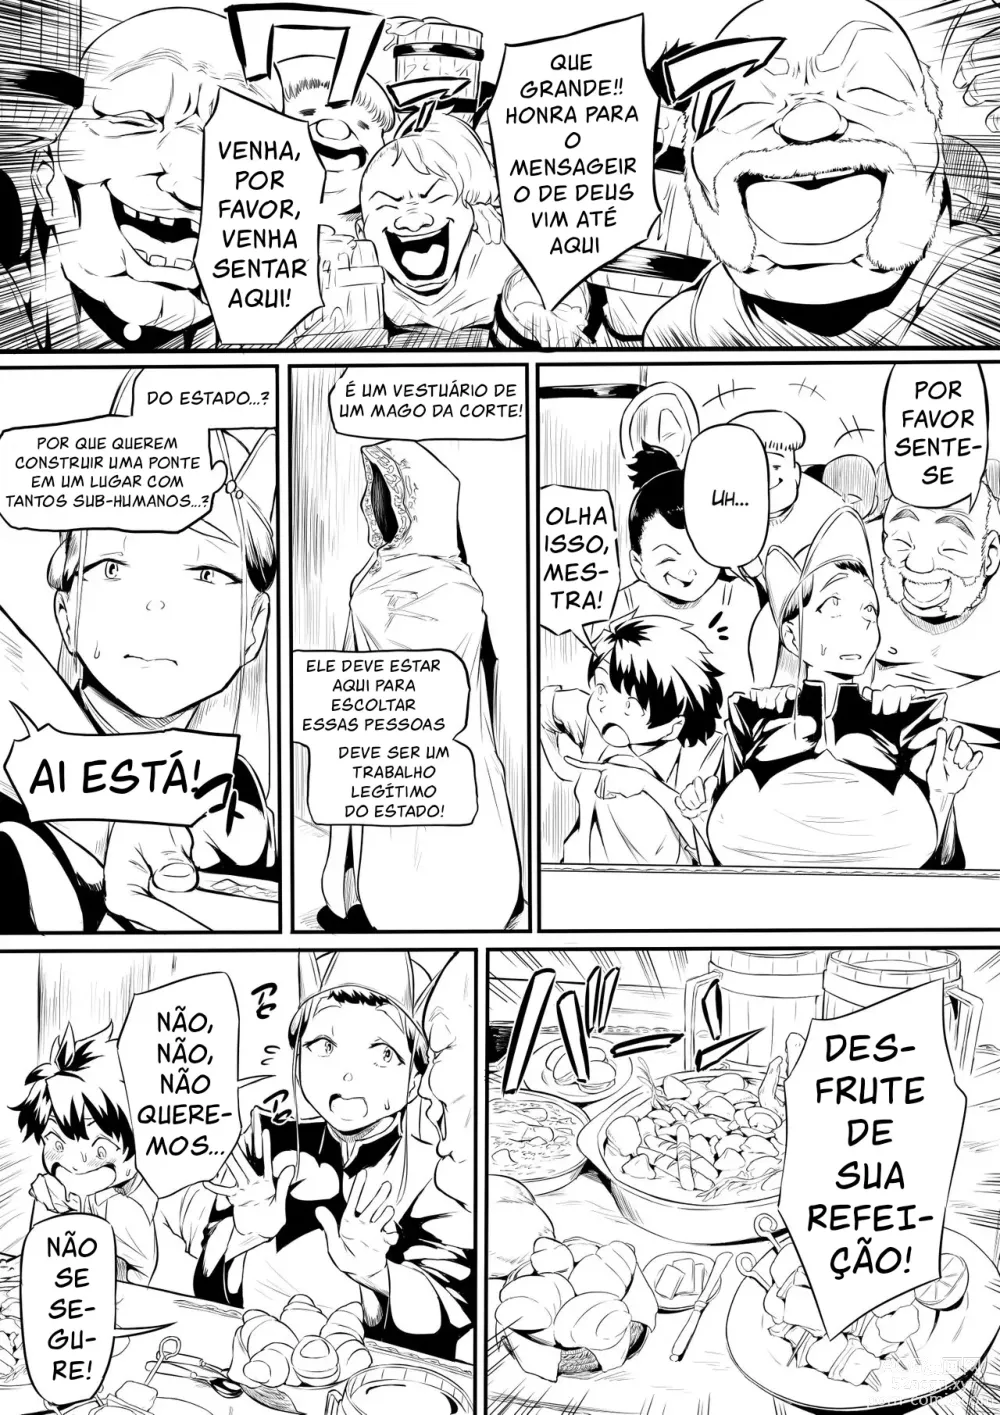 Page 5 of doujinshi Taverna Orc PT BR